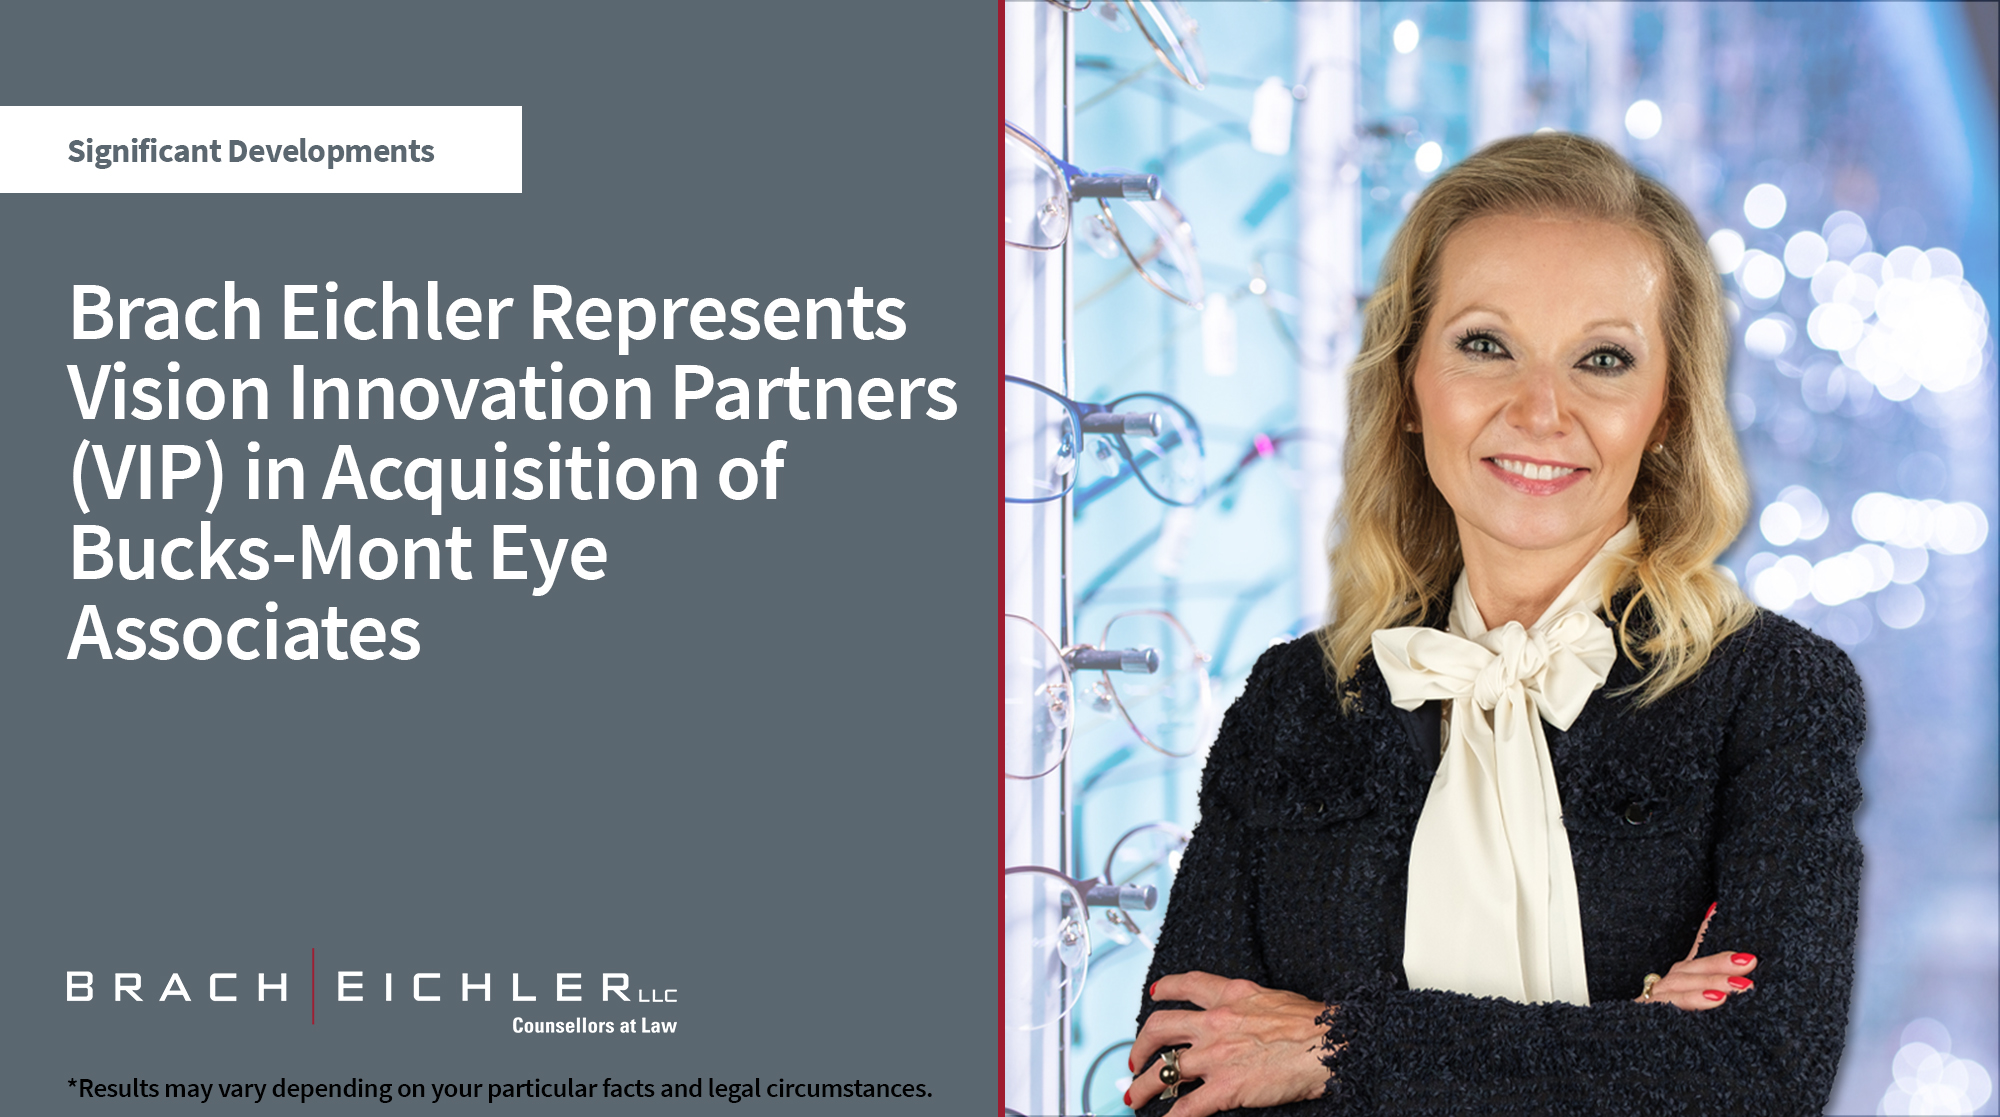 Brach Eichler Represents Bucks-Mont Eye Associates in its M&A Transaction with Vision Innovation Partners (VIP) - Brach Eichler